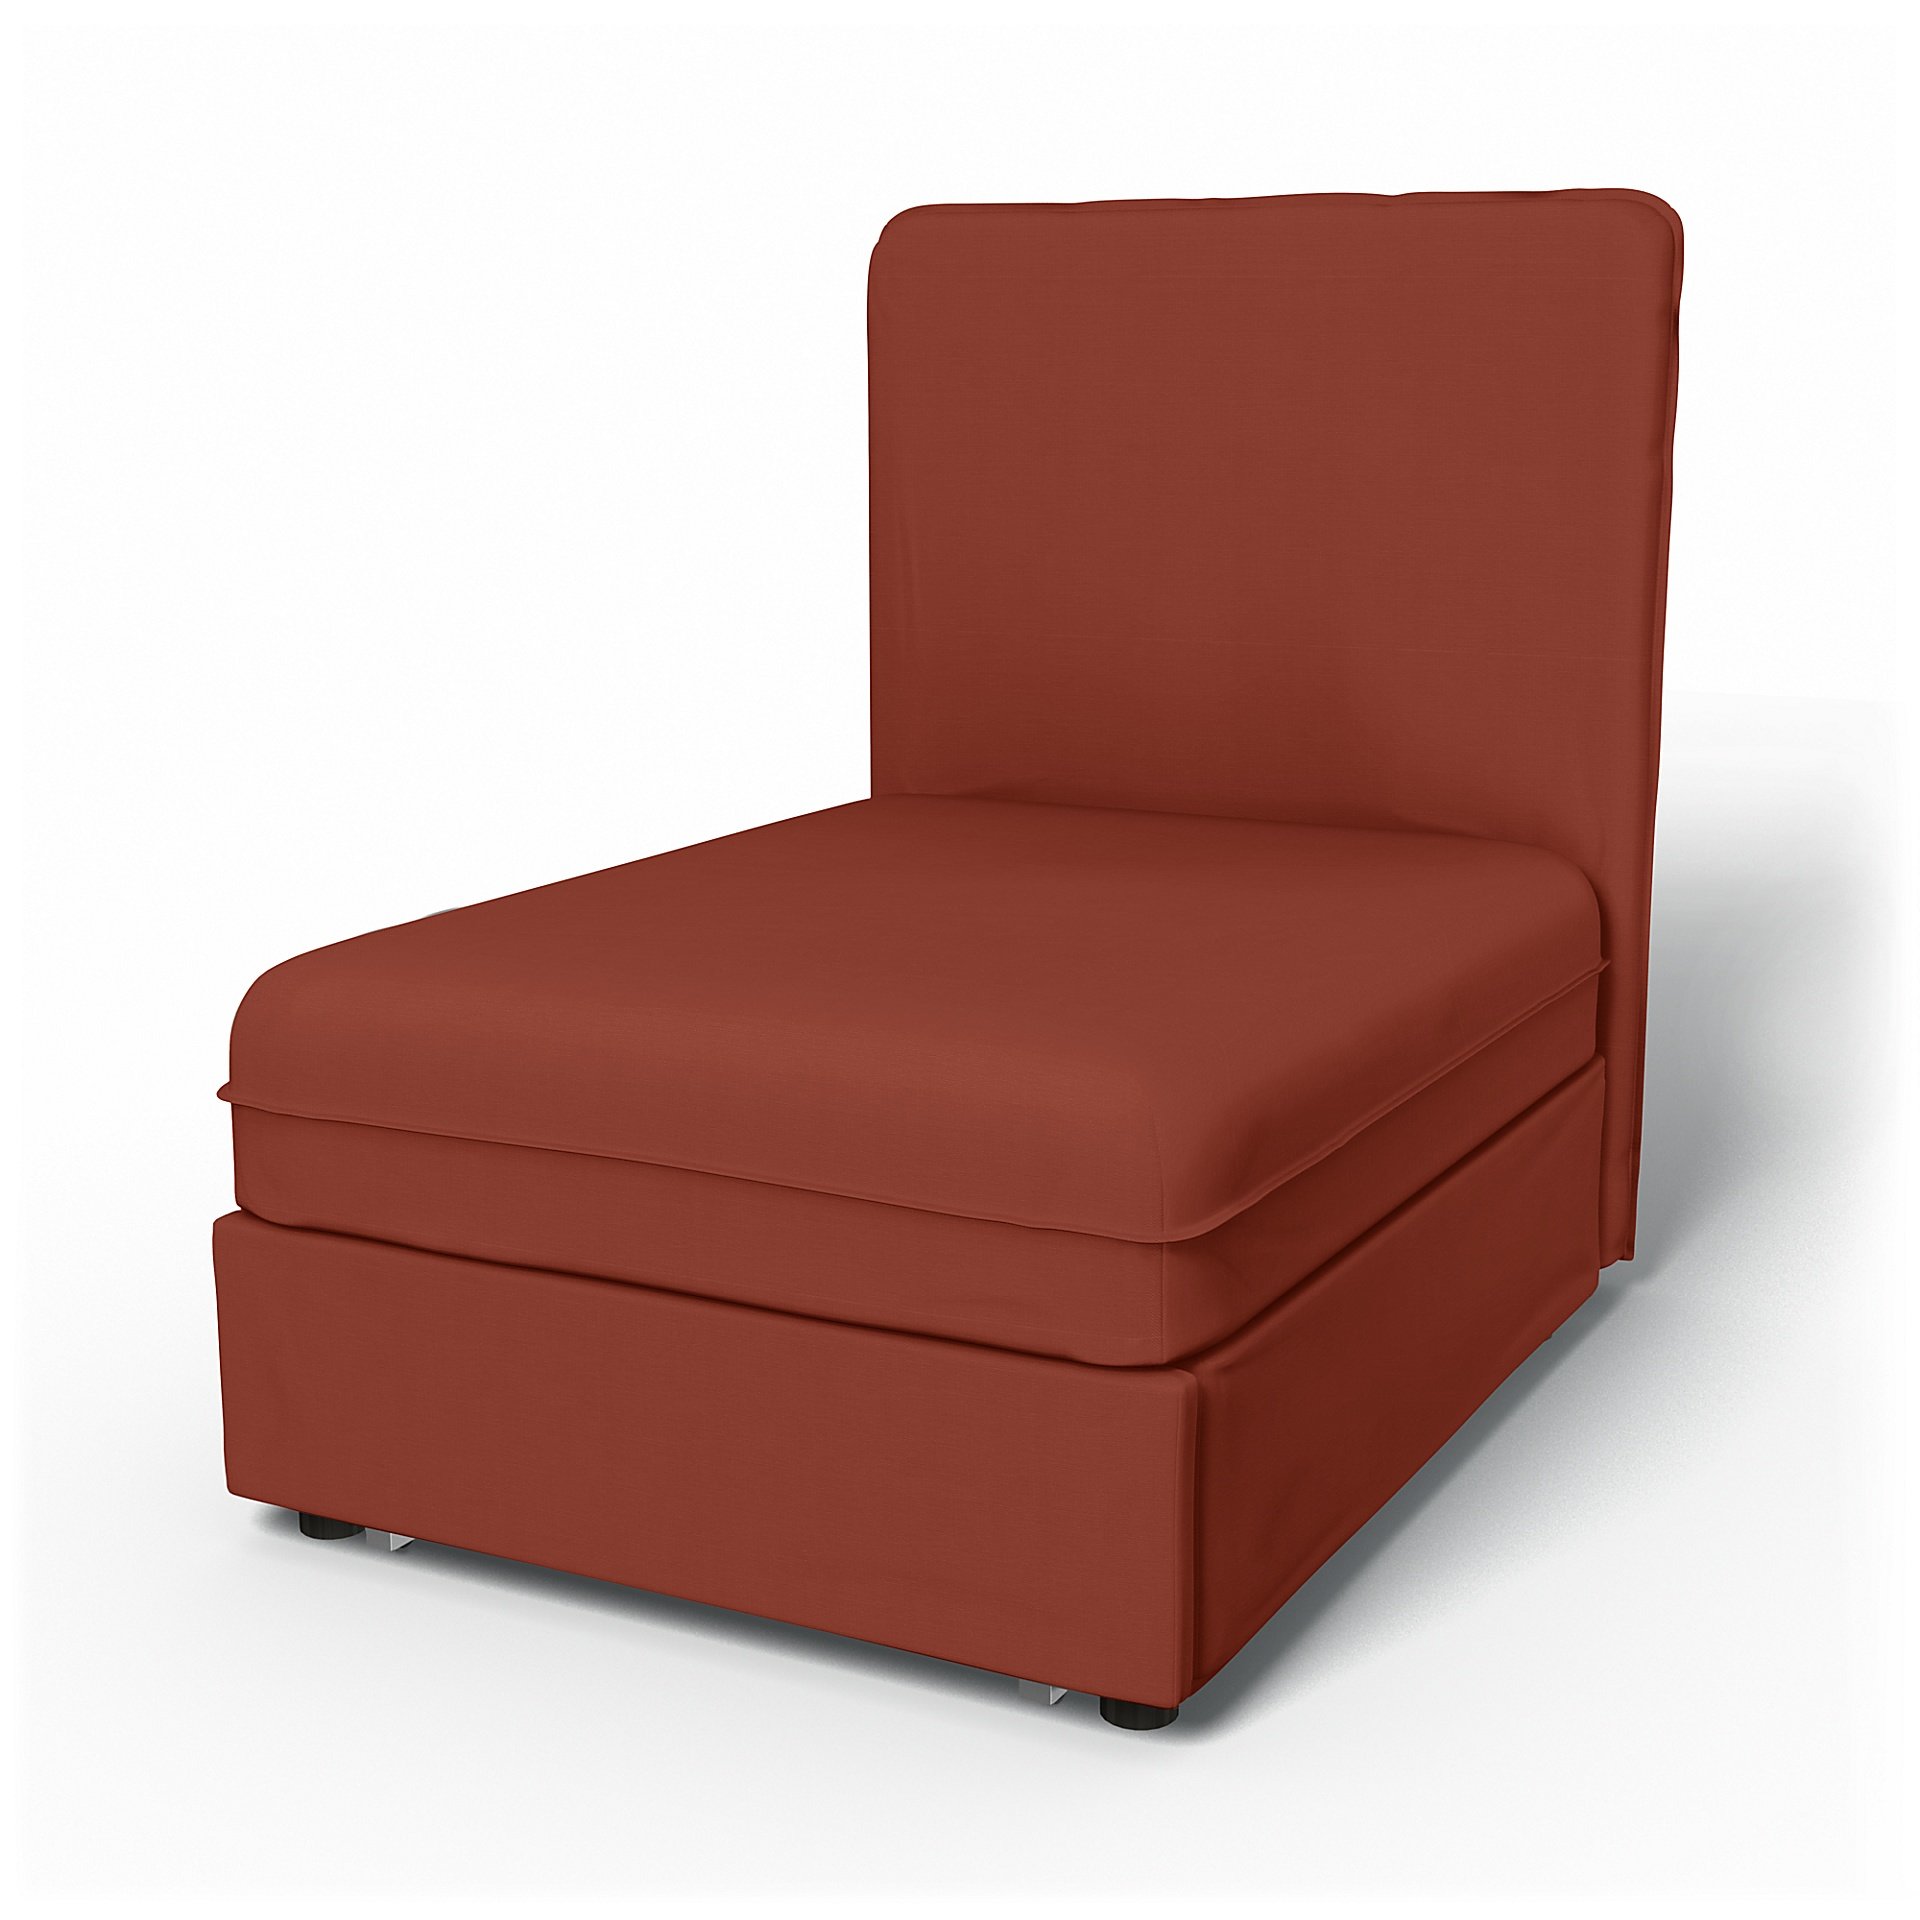 IKEA - Vallentuna Seat Module with High Back Sofa Bed Cover (80x100x46cm), Burnt Orange, Cotton - Be